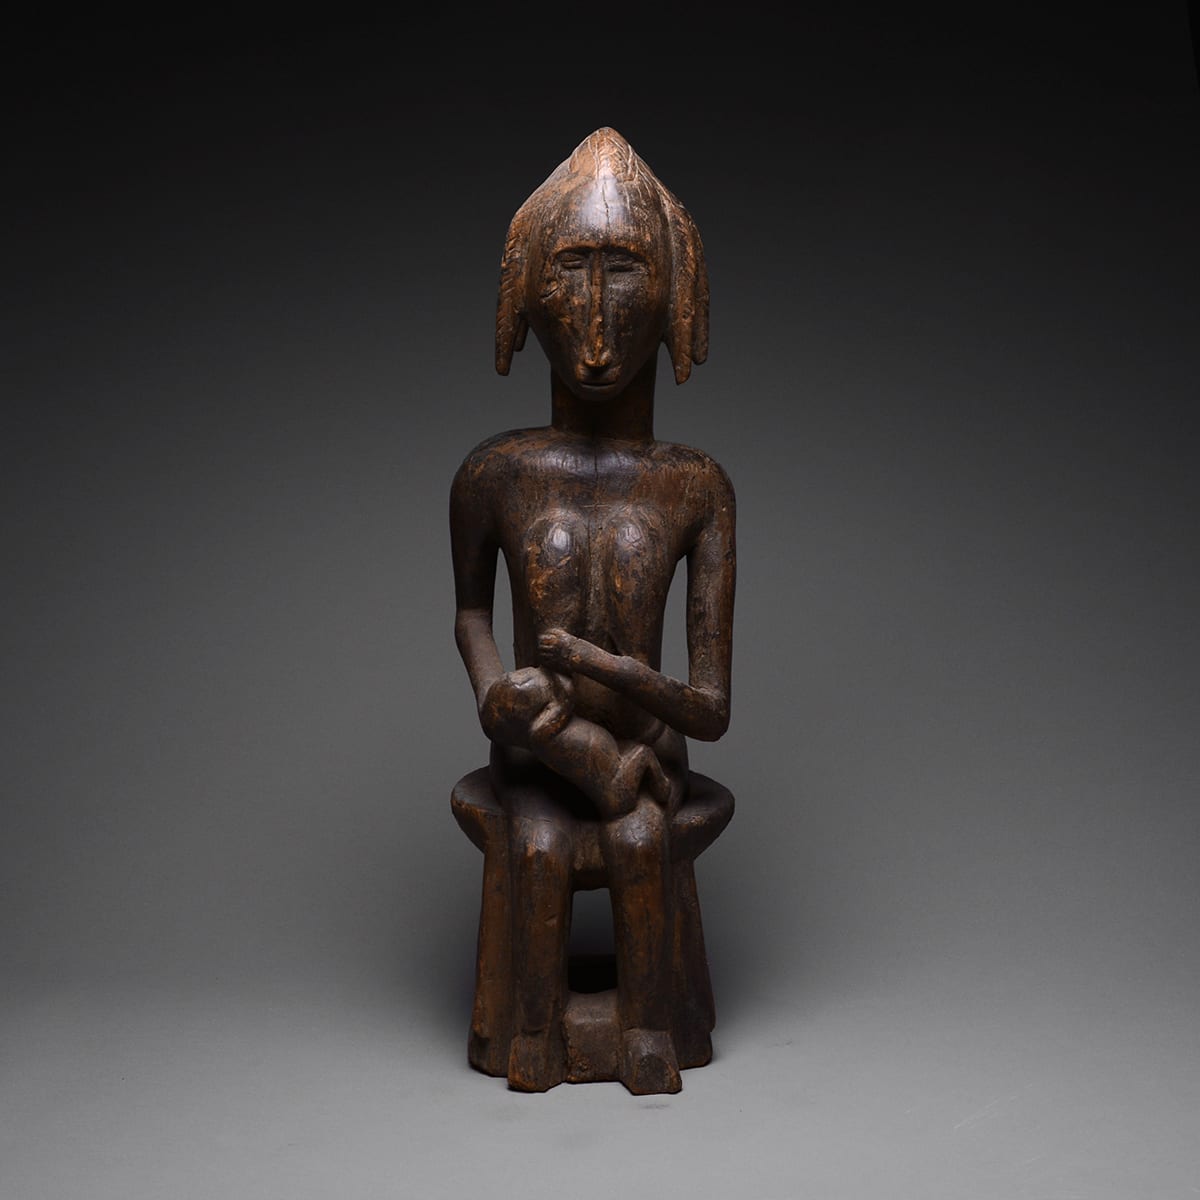 Seated Female Figure, Bamana peoples